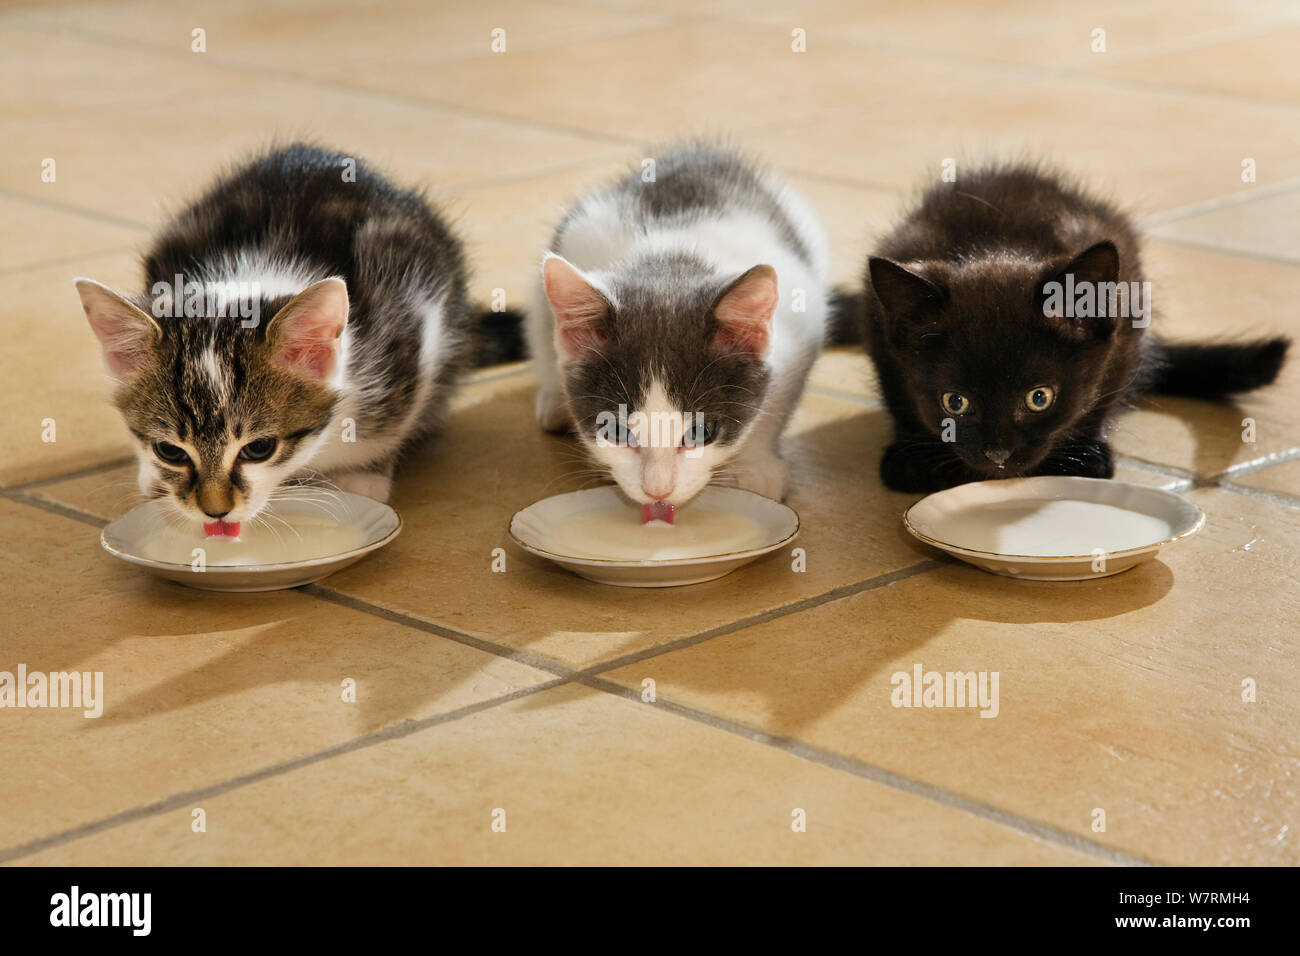 Kittens drinking milk, Germany Stock Photo